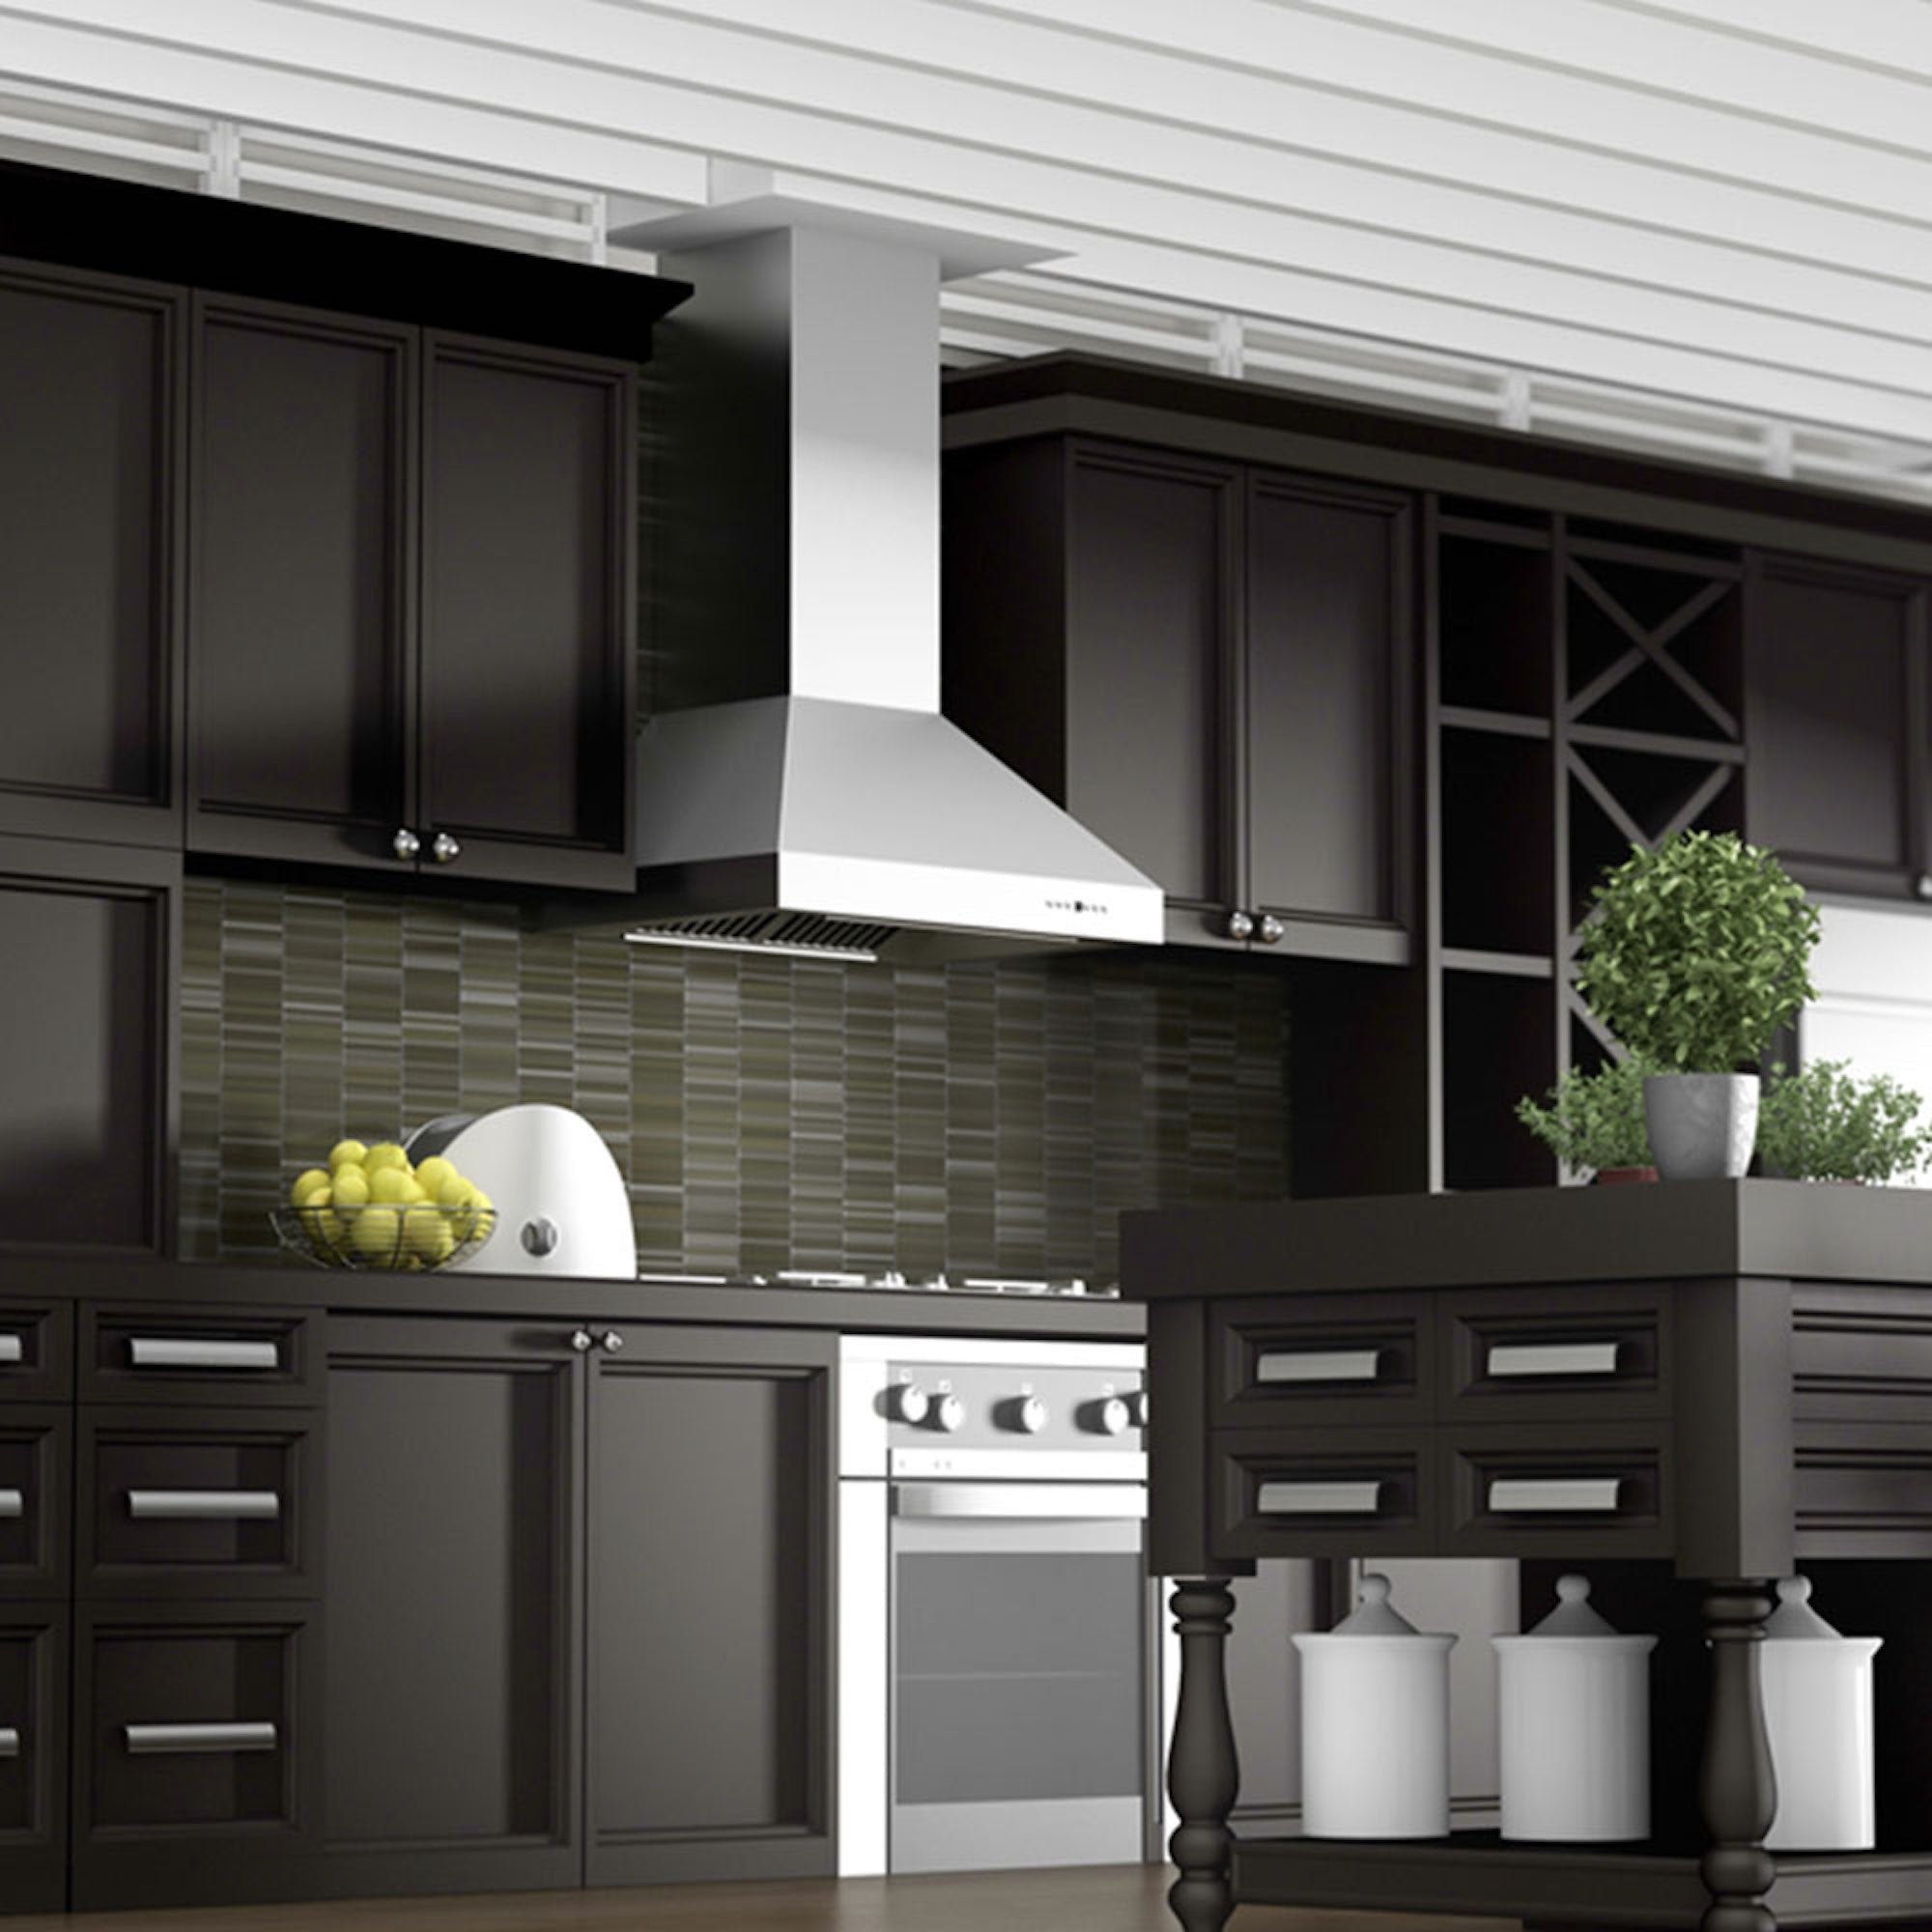 ZLINE Professional Ducted Wall Mount Range Hood rendering in a luxury kitchen wide.